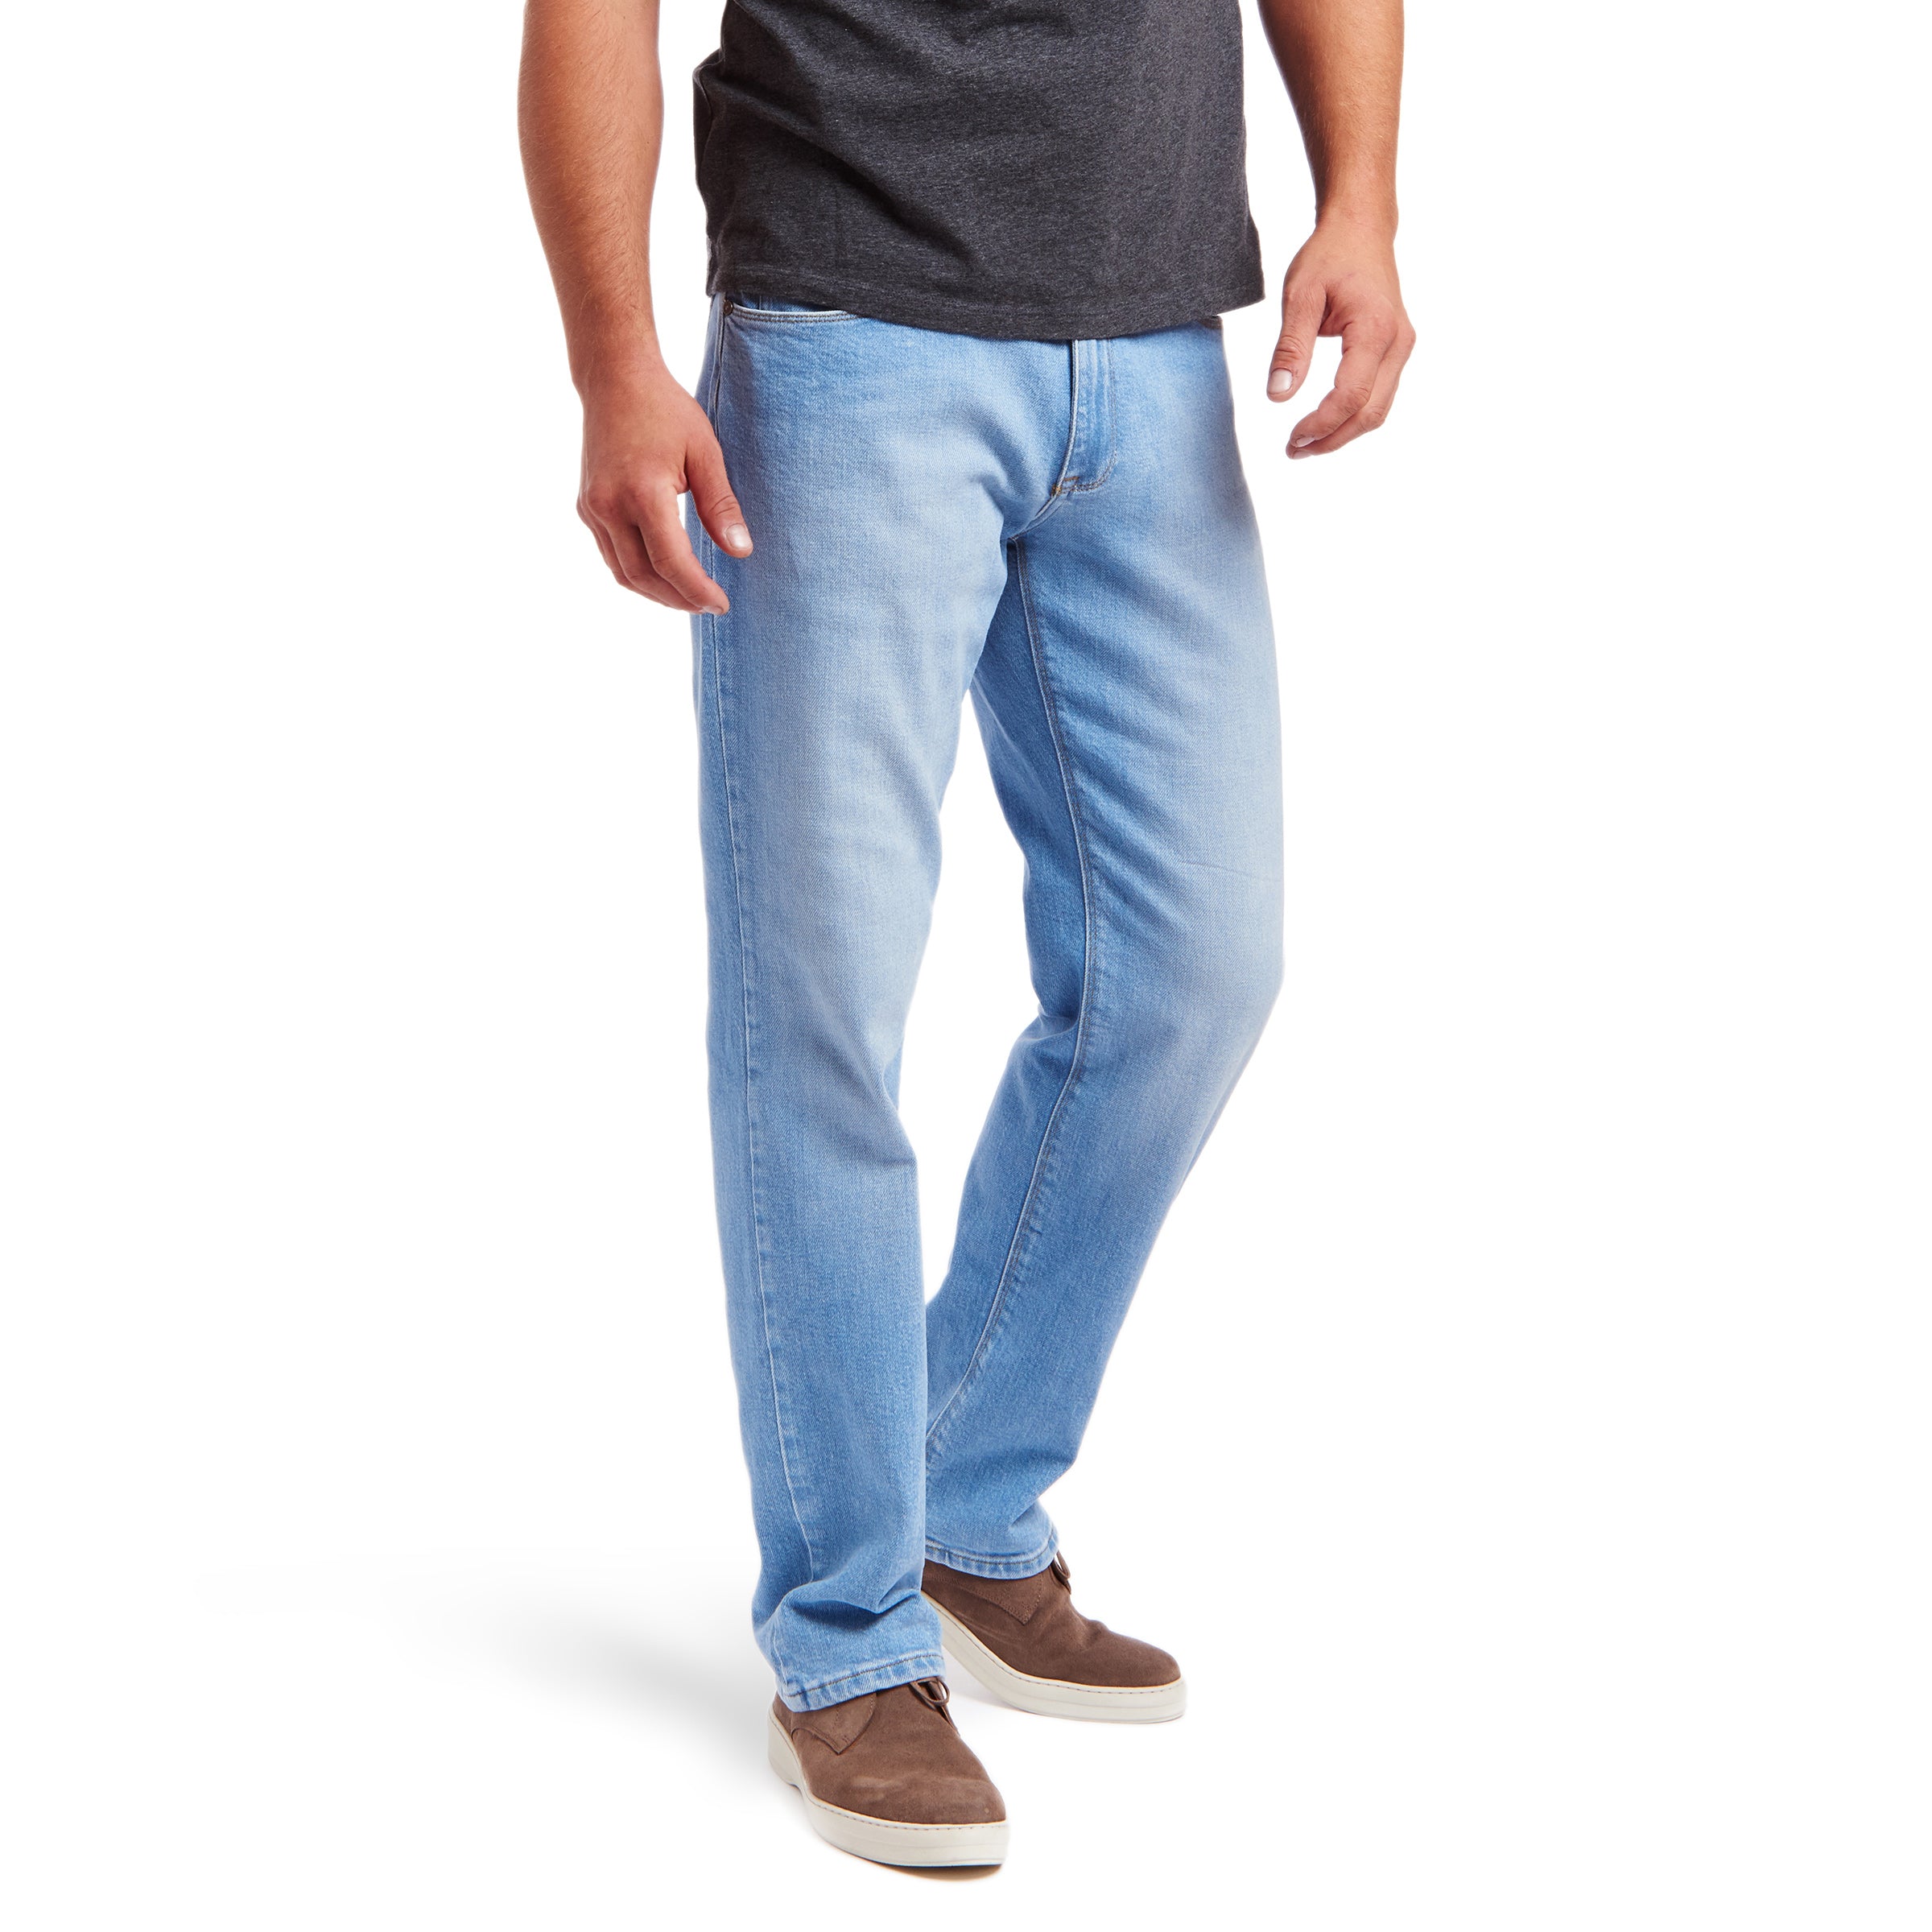 Men wearing Light Blue Straight Hubert Jeans